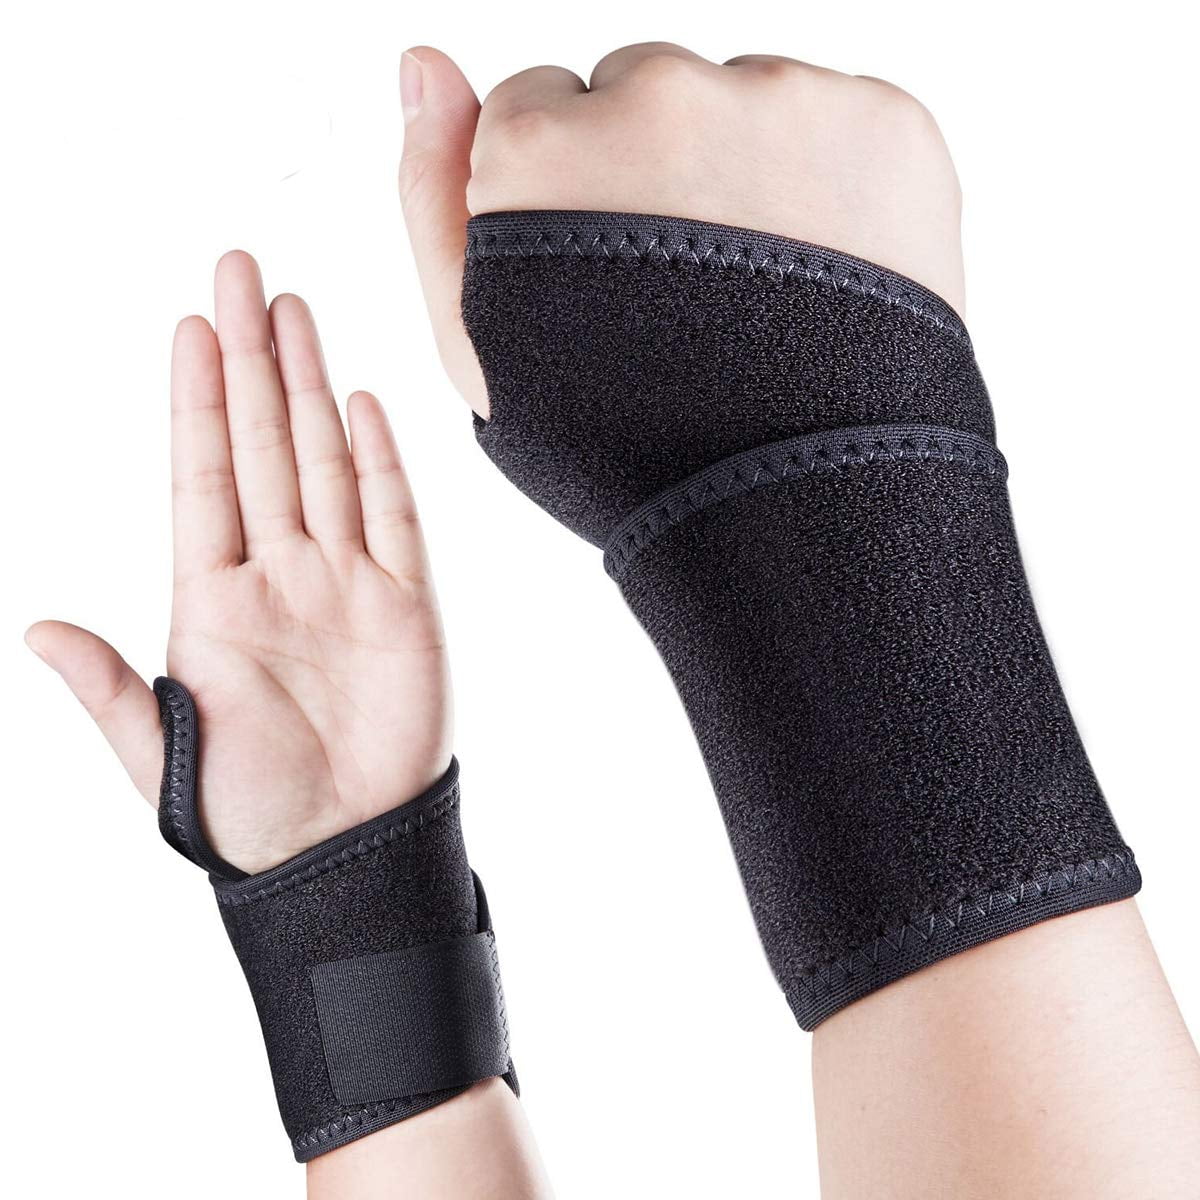 ZingineW Wrist Brace,Wrist Support Fitness, Adjustable Breathable Wrist Straps 2 Packs Wrist Protection for Men，Women Sports